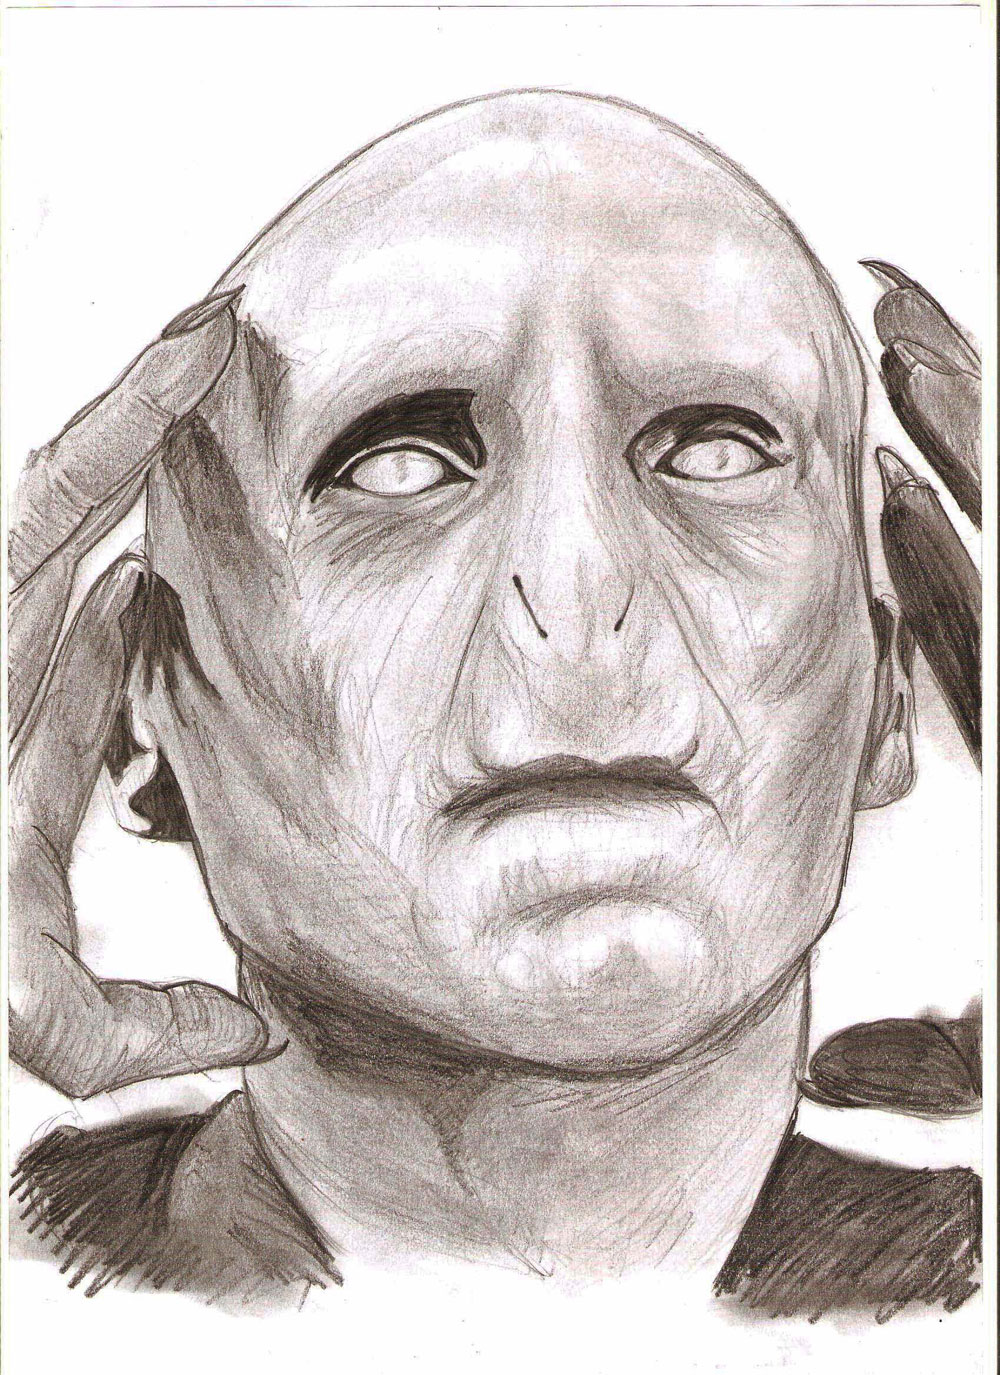 Lord Voldemort by MajaGantzi